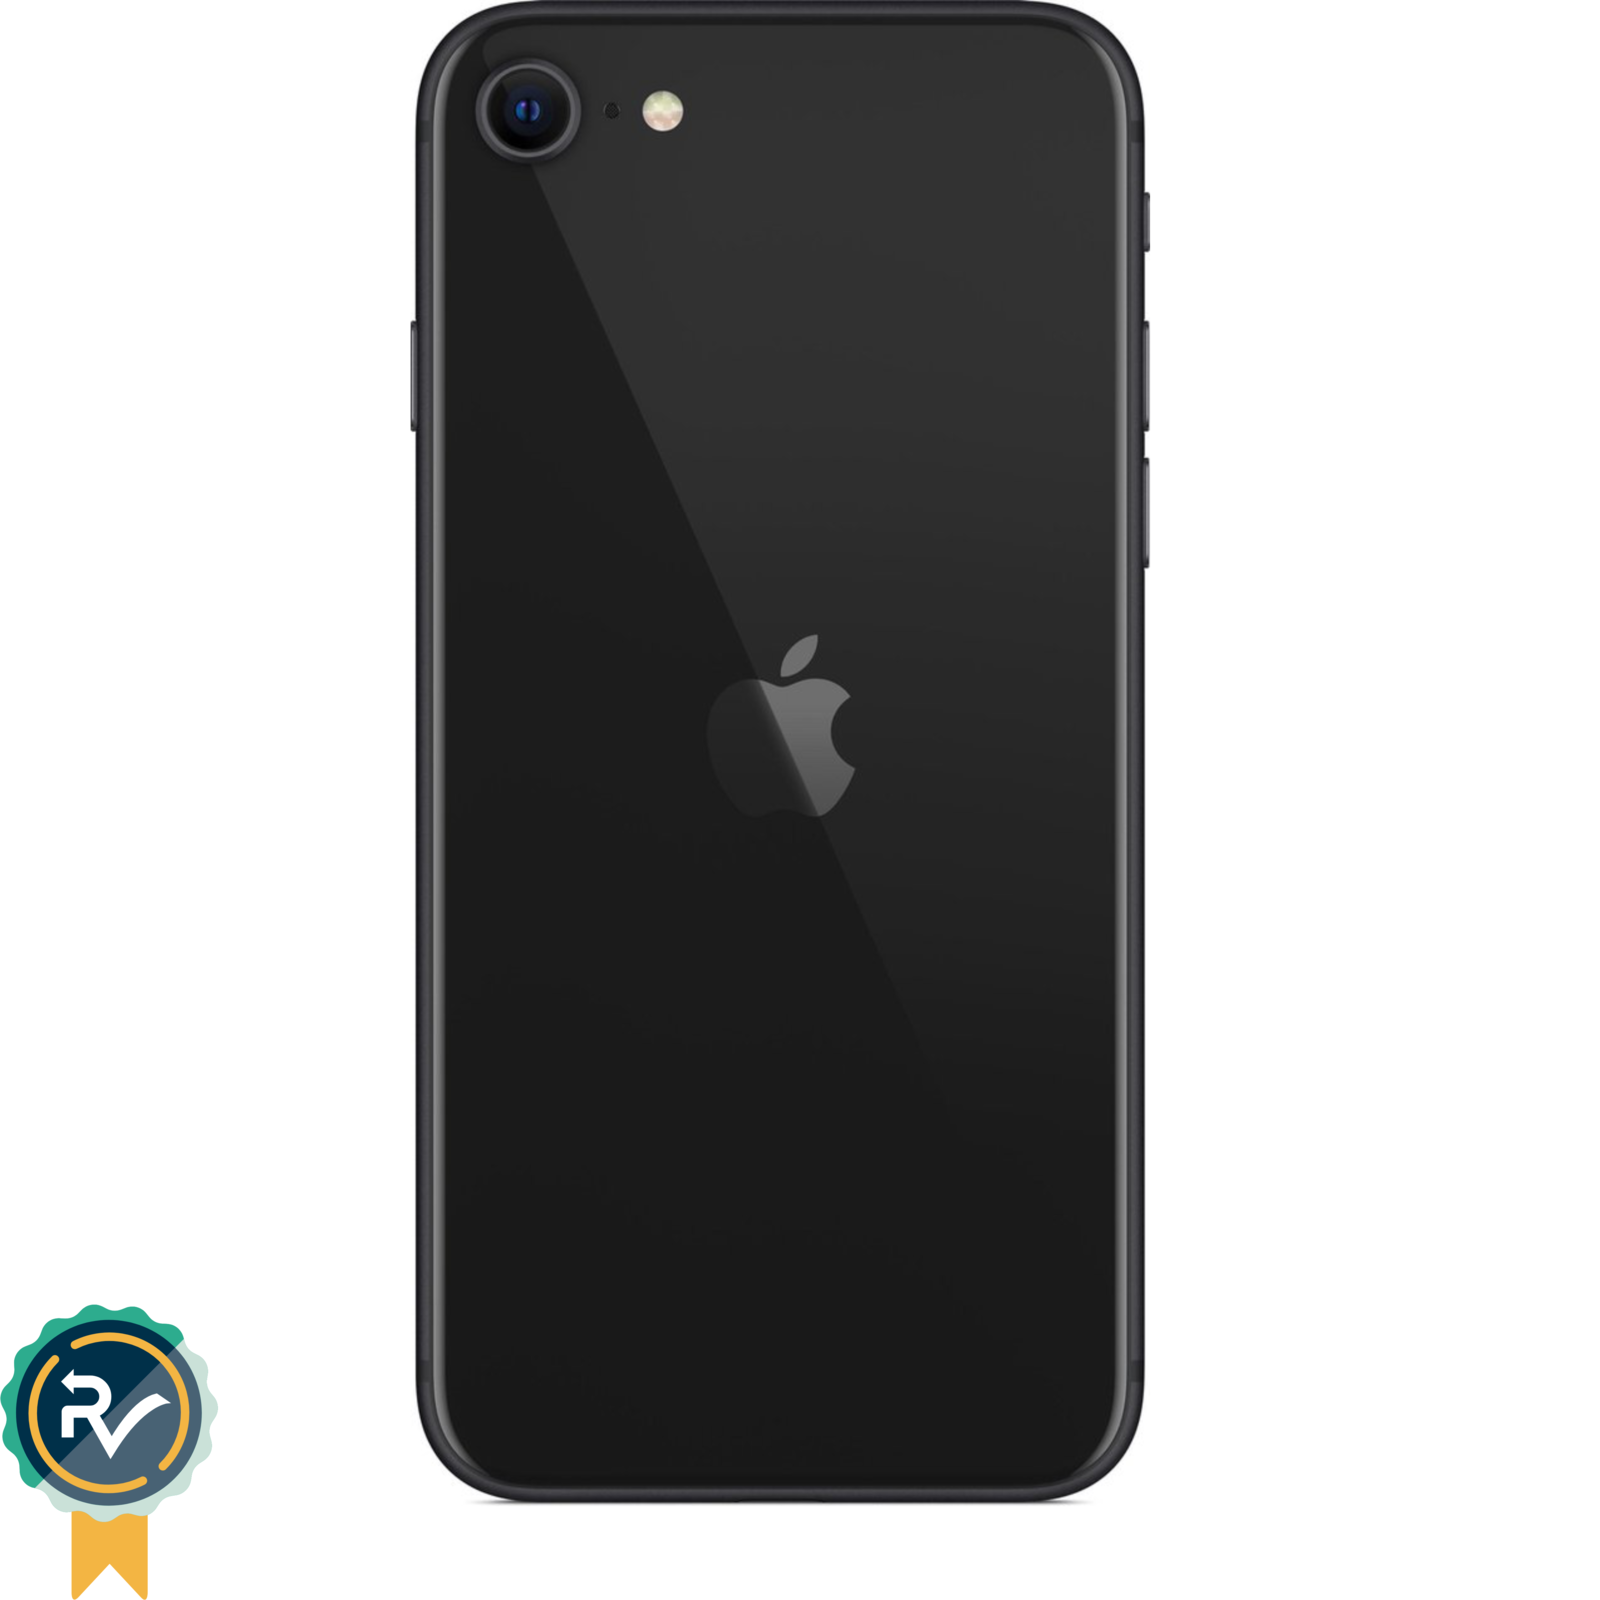 Apple iPhone SE 2020 64GB Zwart